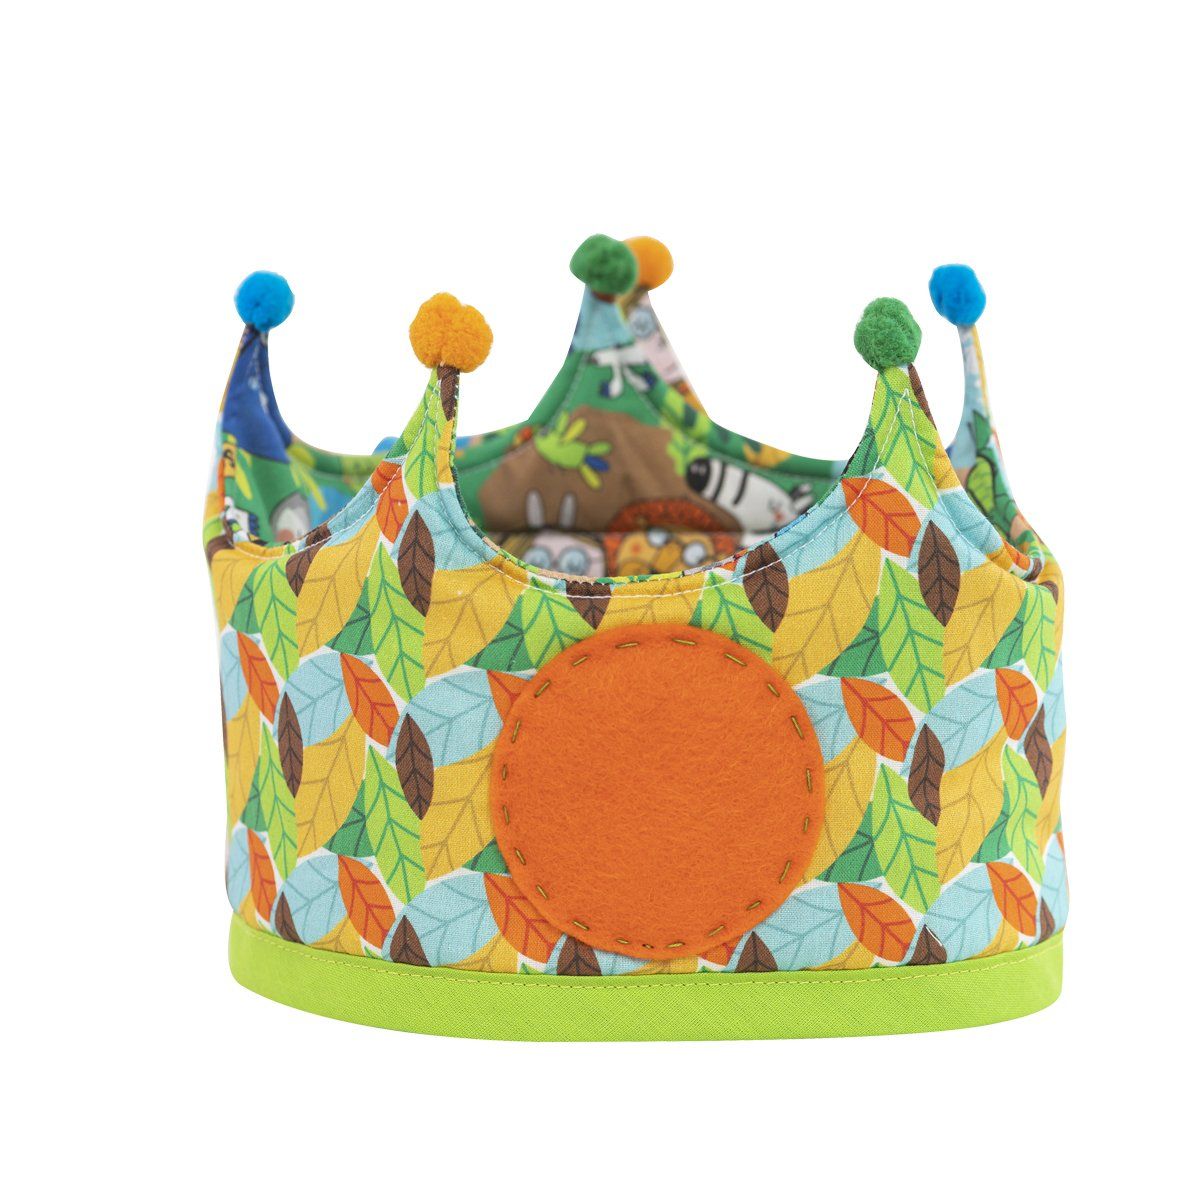 Corona de tela reversible para cumpleaños - Modelo Unicornios | Nenel